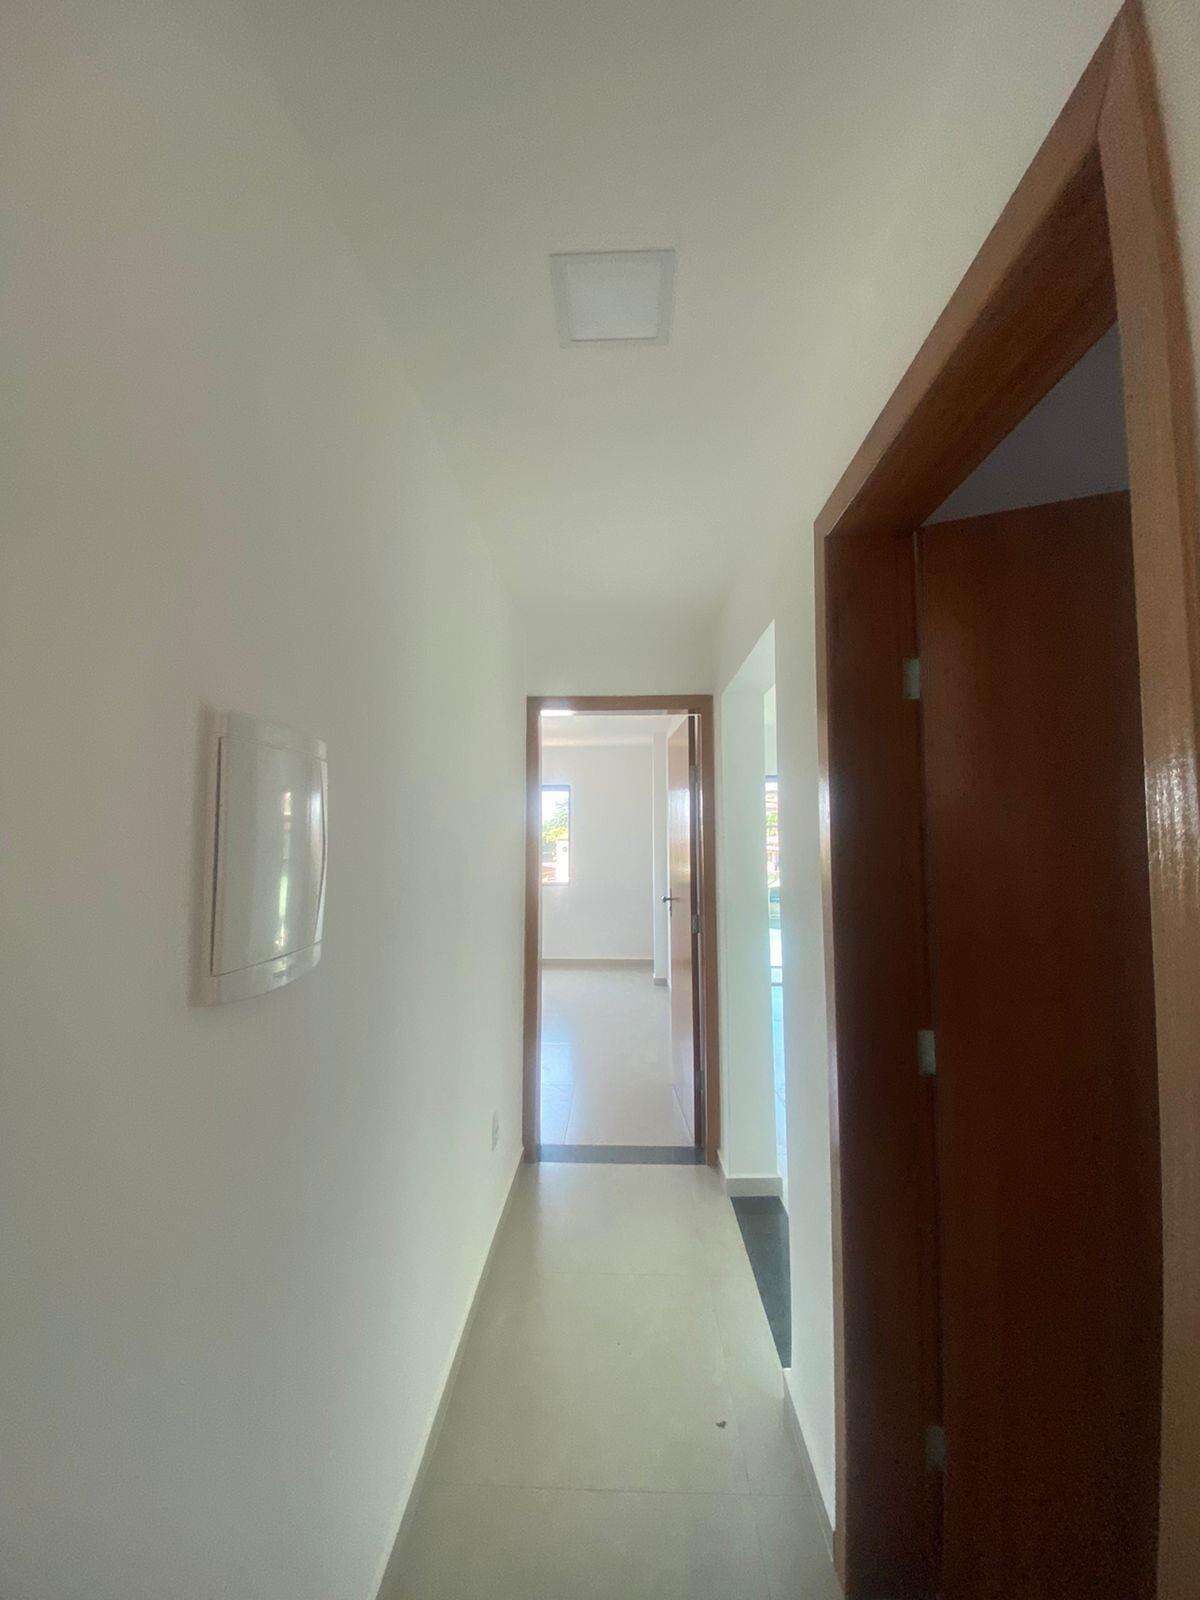 Apartamento 3 quartos para aluguel no Esplanada: 86c2363b-d-whatsapp-image-2023-11-20-at-14.48.27.jpeg